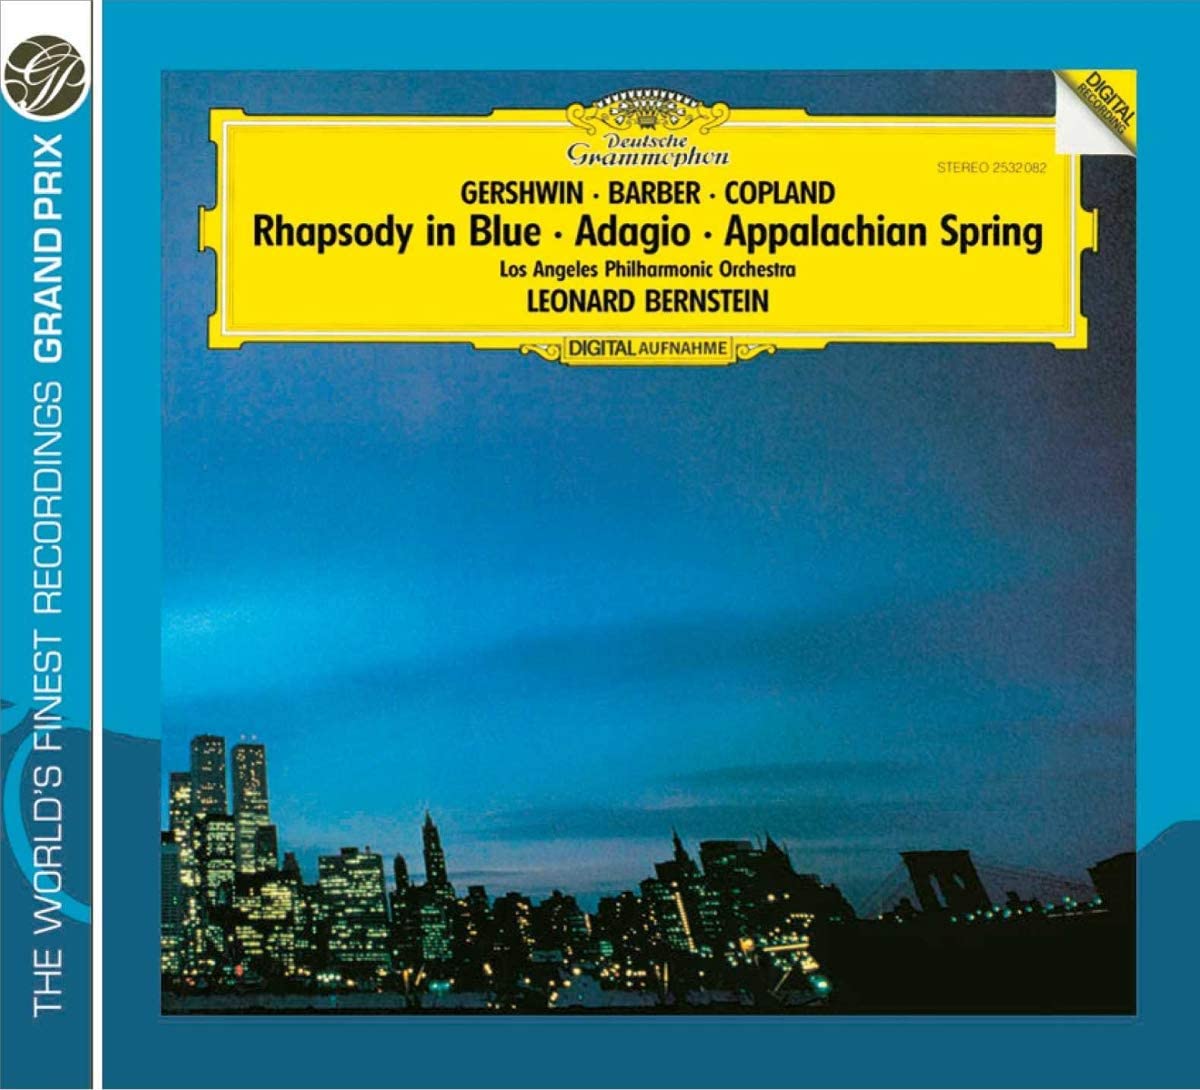 Rhapsody In Blue, Adagio, Appalachian Spring | Gershwin, Barber, Copland, Leonard Bernstein